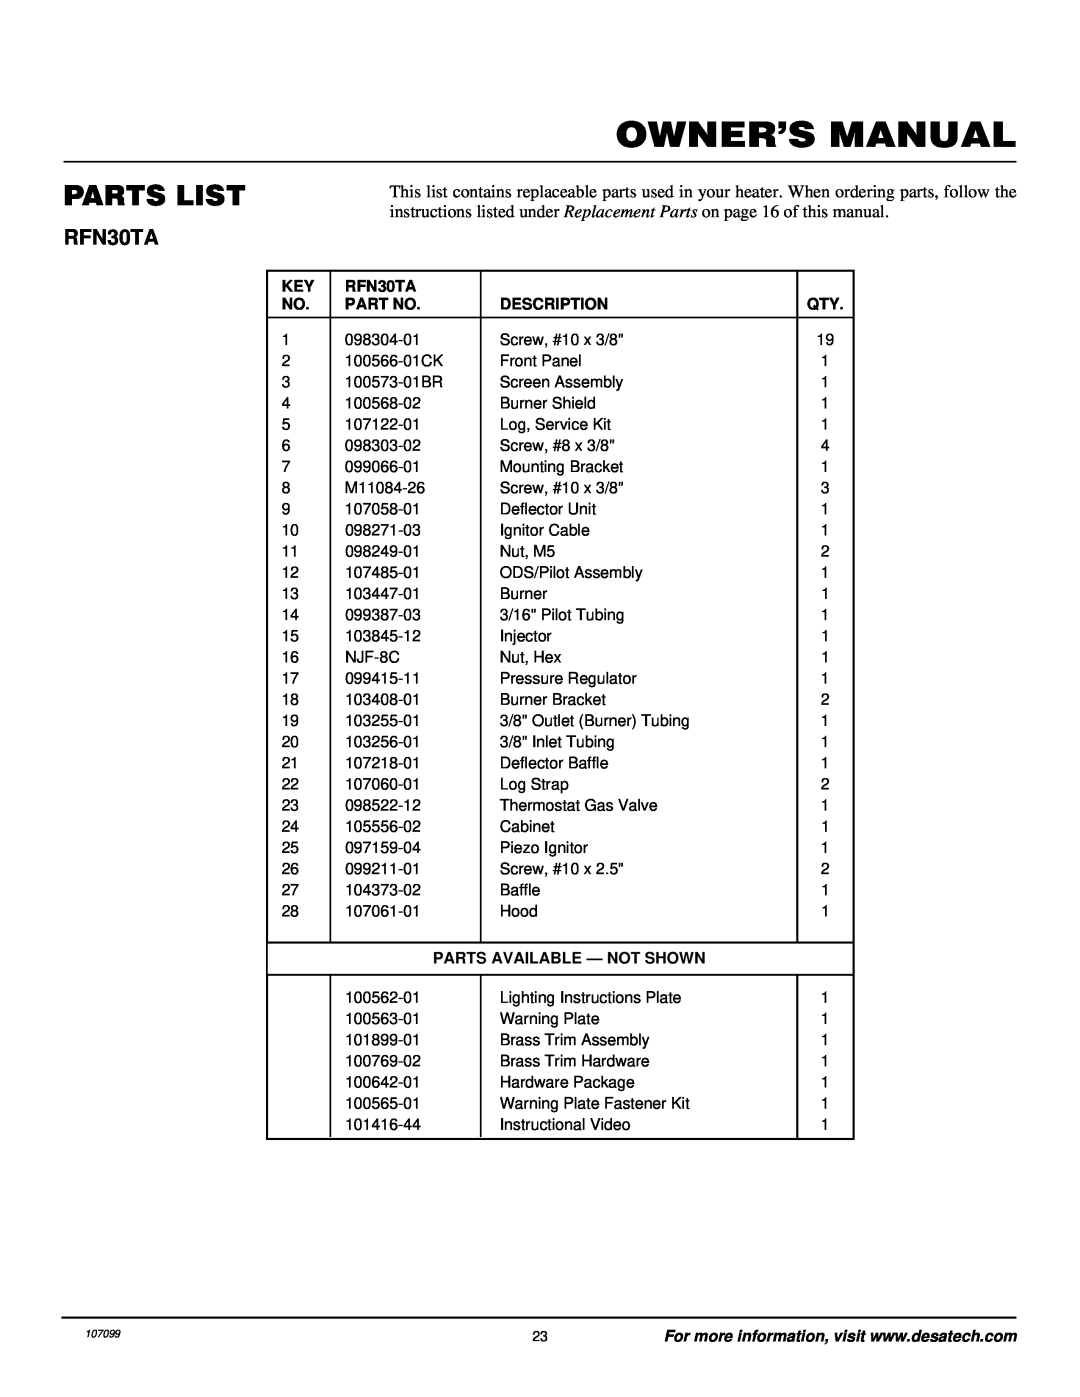 Desa RFN30TA installation manual Parts List, Description, Parts Available - Not Shown 